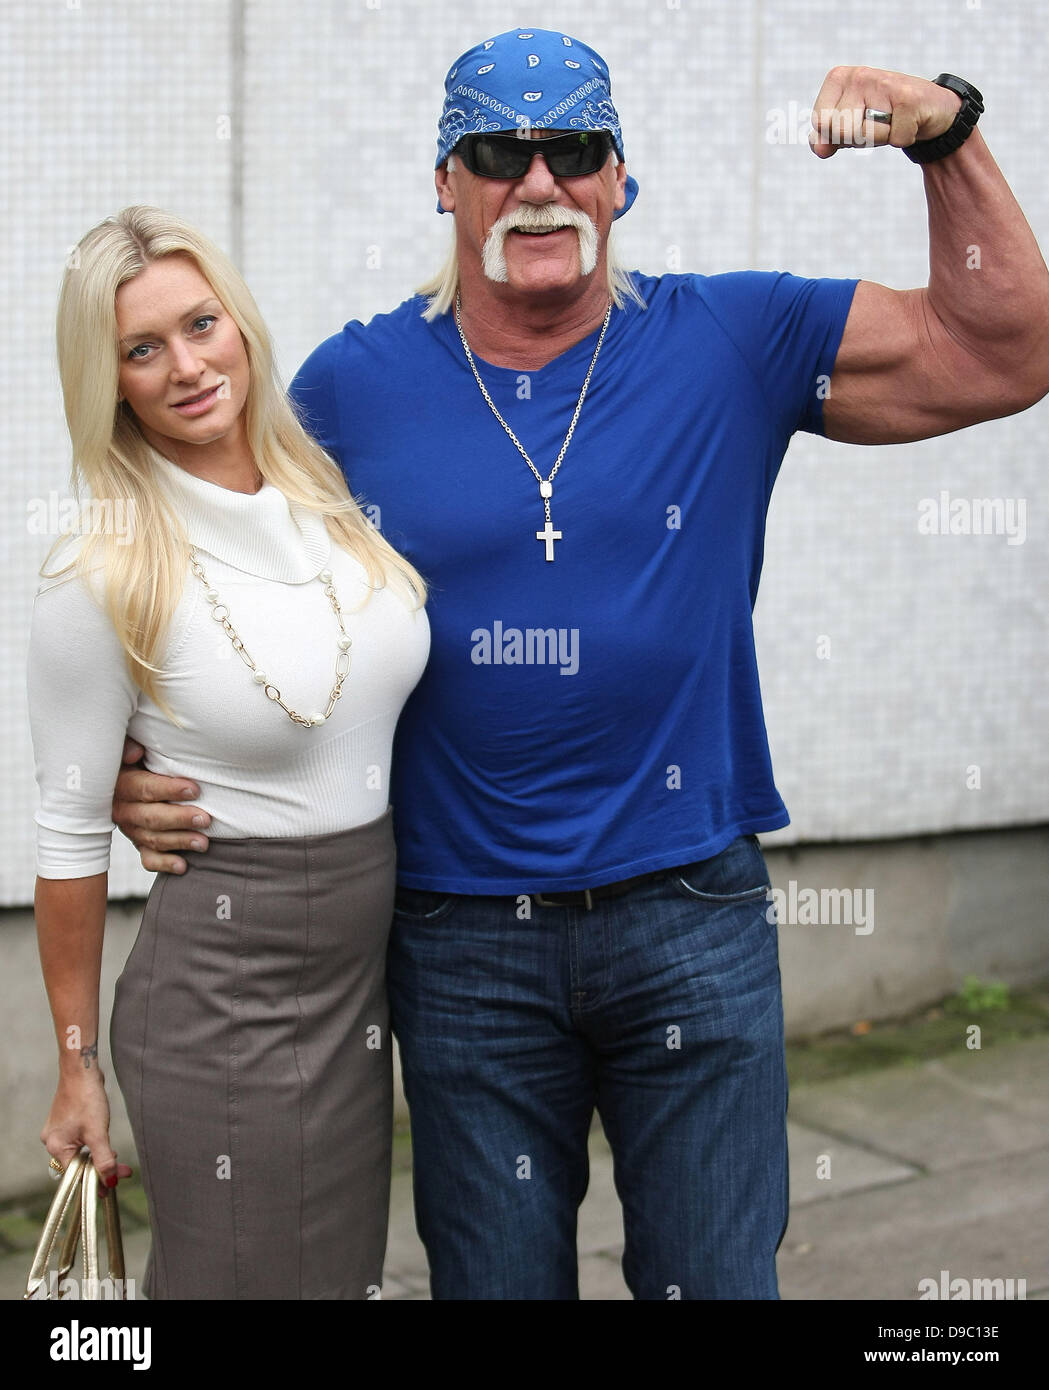 Hulk Hogan and his Jennifer McDaniel ITV studios London, England - 25.01.12 Stock Photo - Alamy